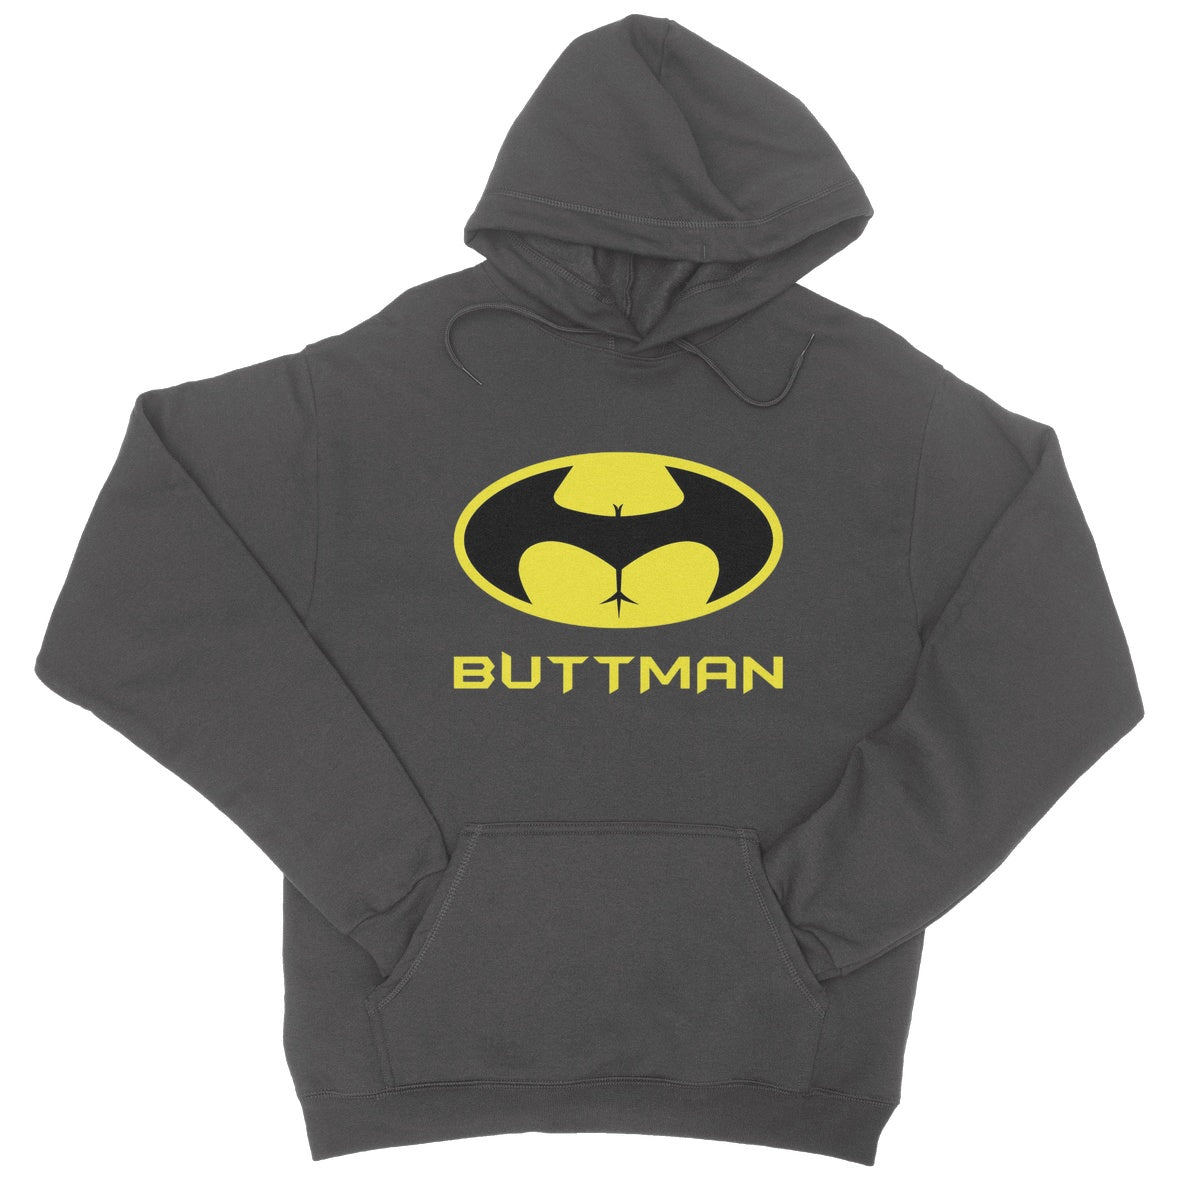 buttman hoodie grey